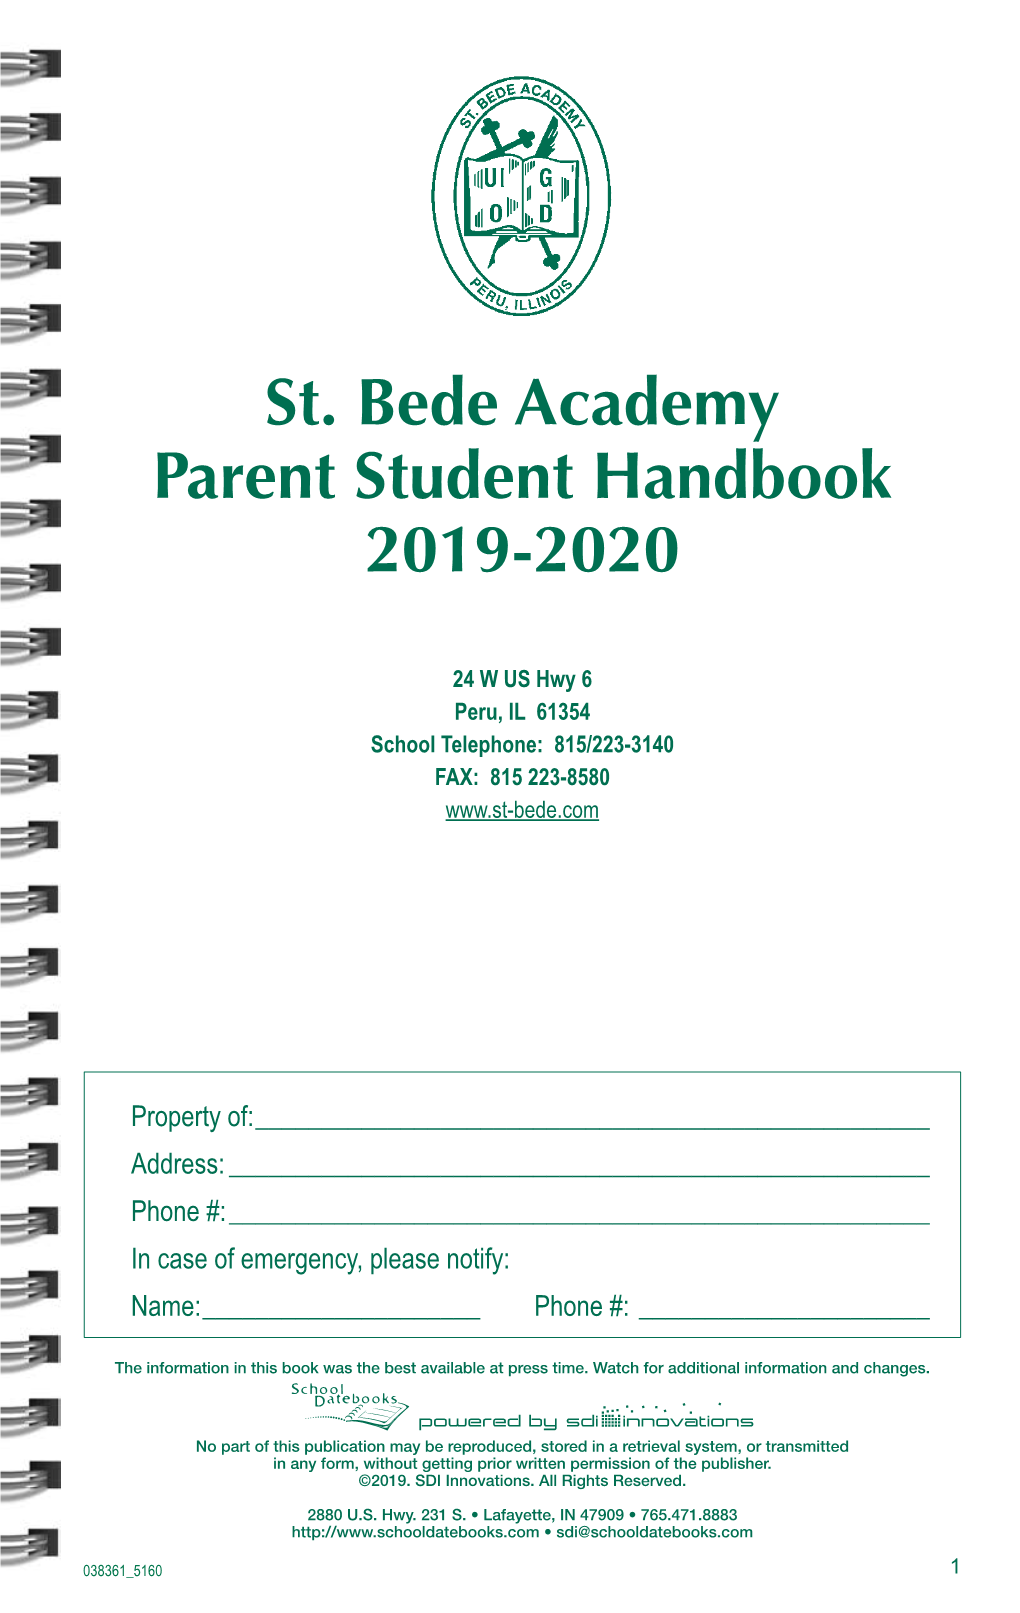 St. Bede Academy Parent Student Handbook 2019-2020